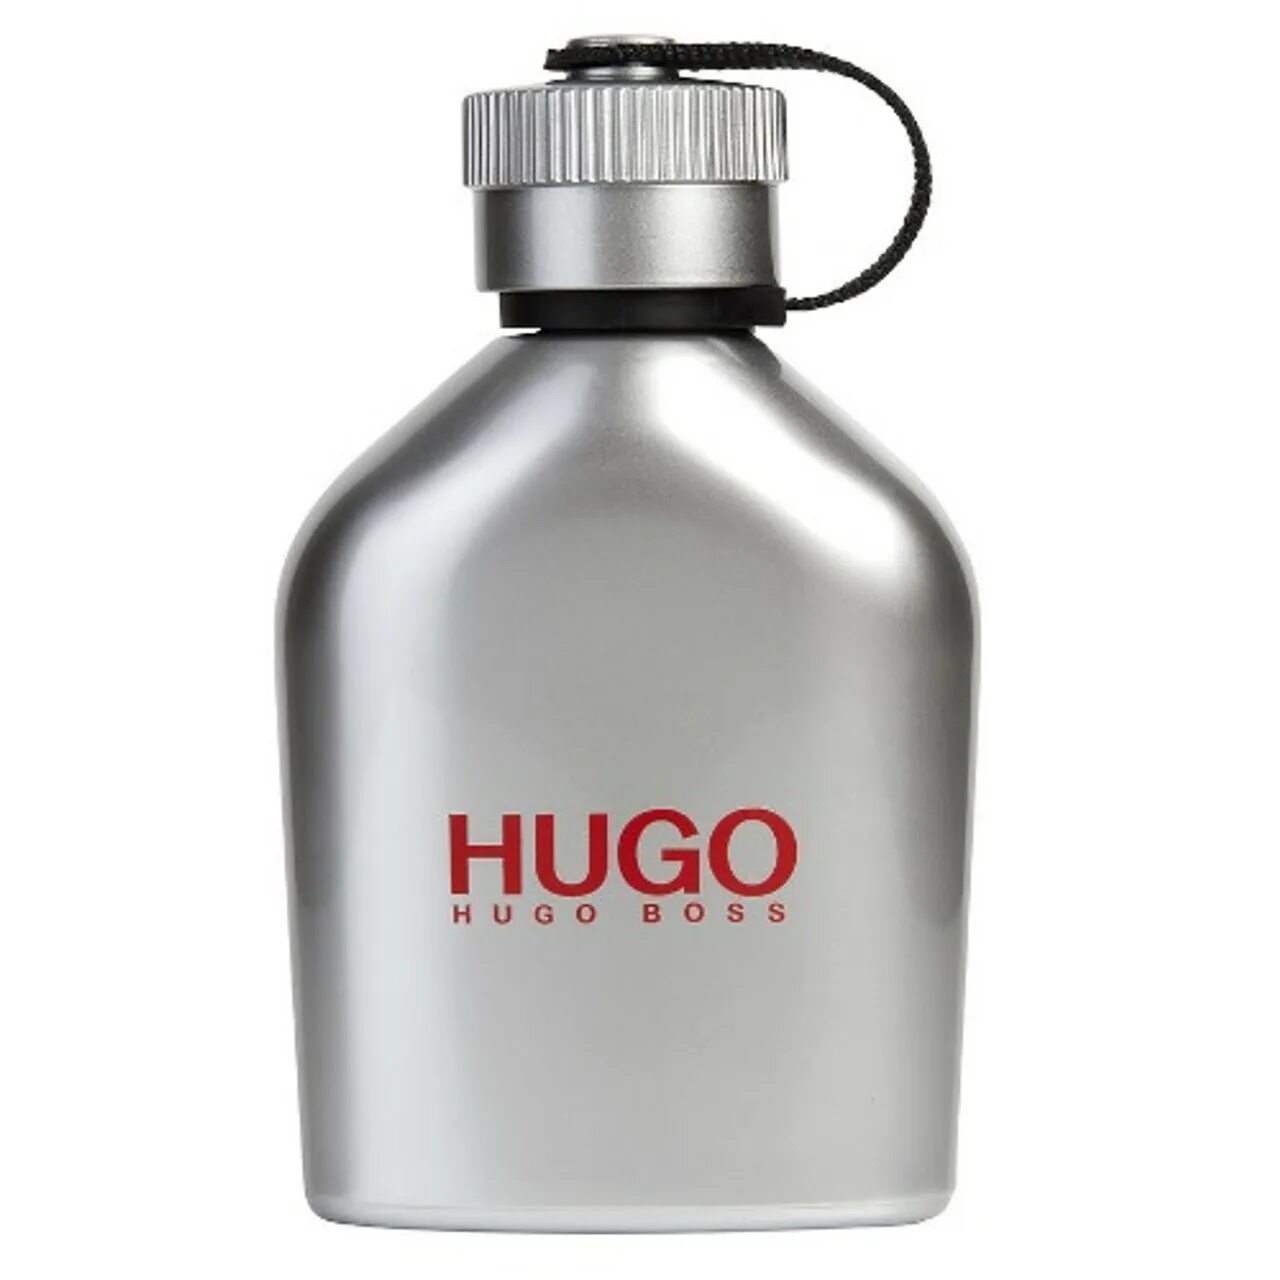 Hugo me. Тестер Hugo Boss Hugo men. Hugo Boss Iced тестер. Хьюго босс Iced 125. Тестер Hugo Boss bottlet 44мл.